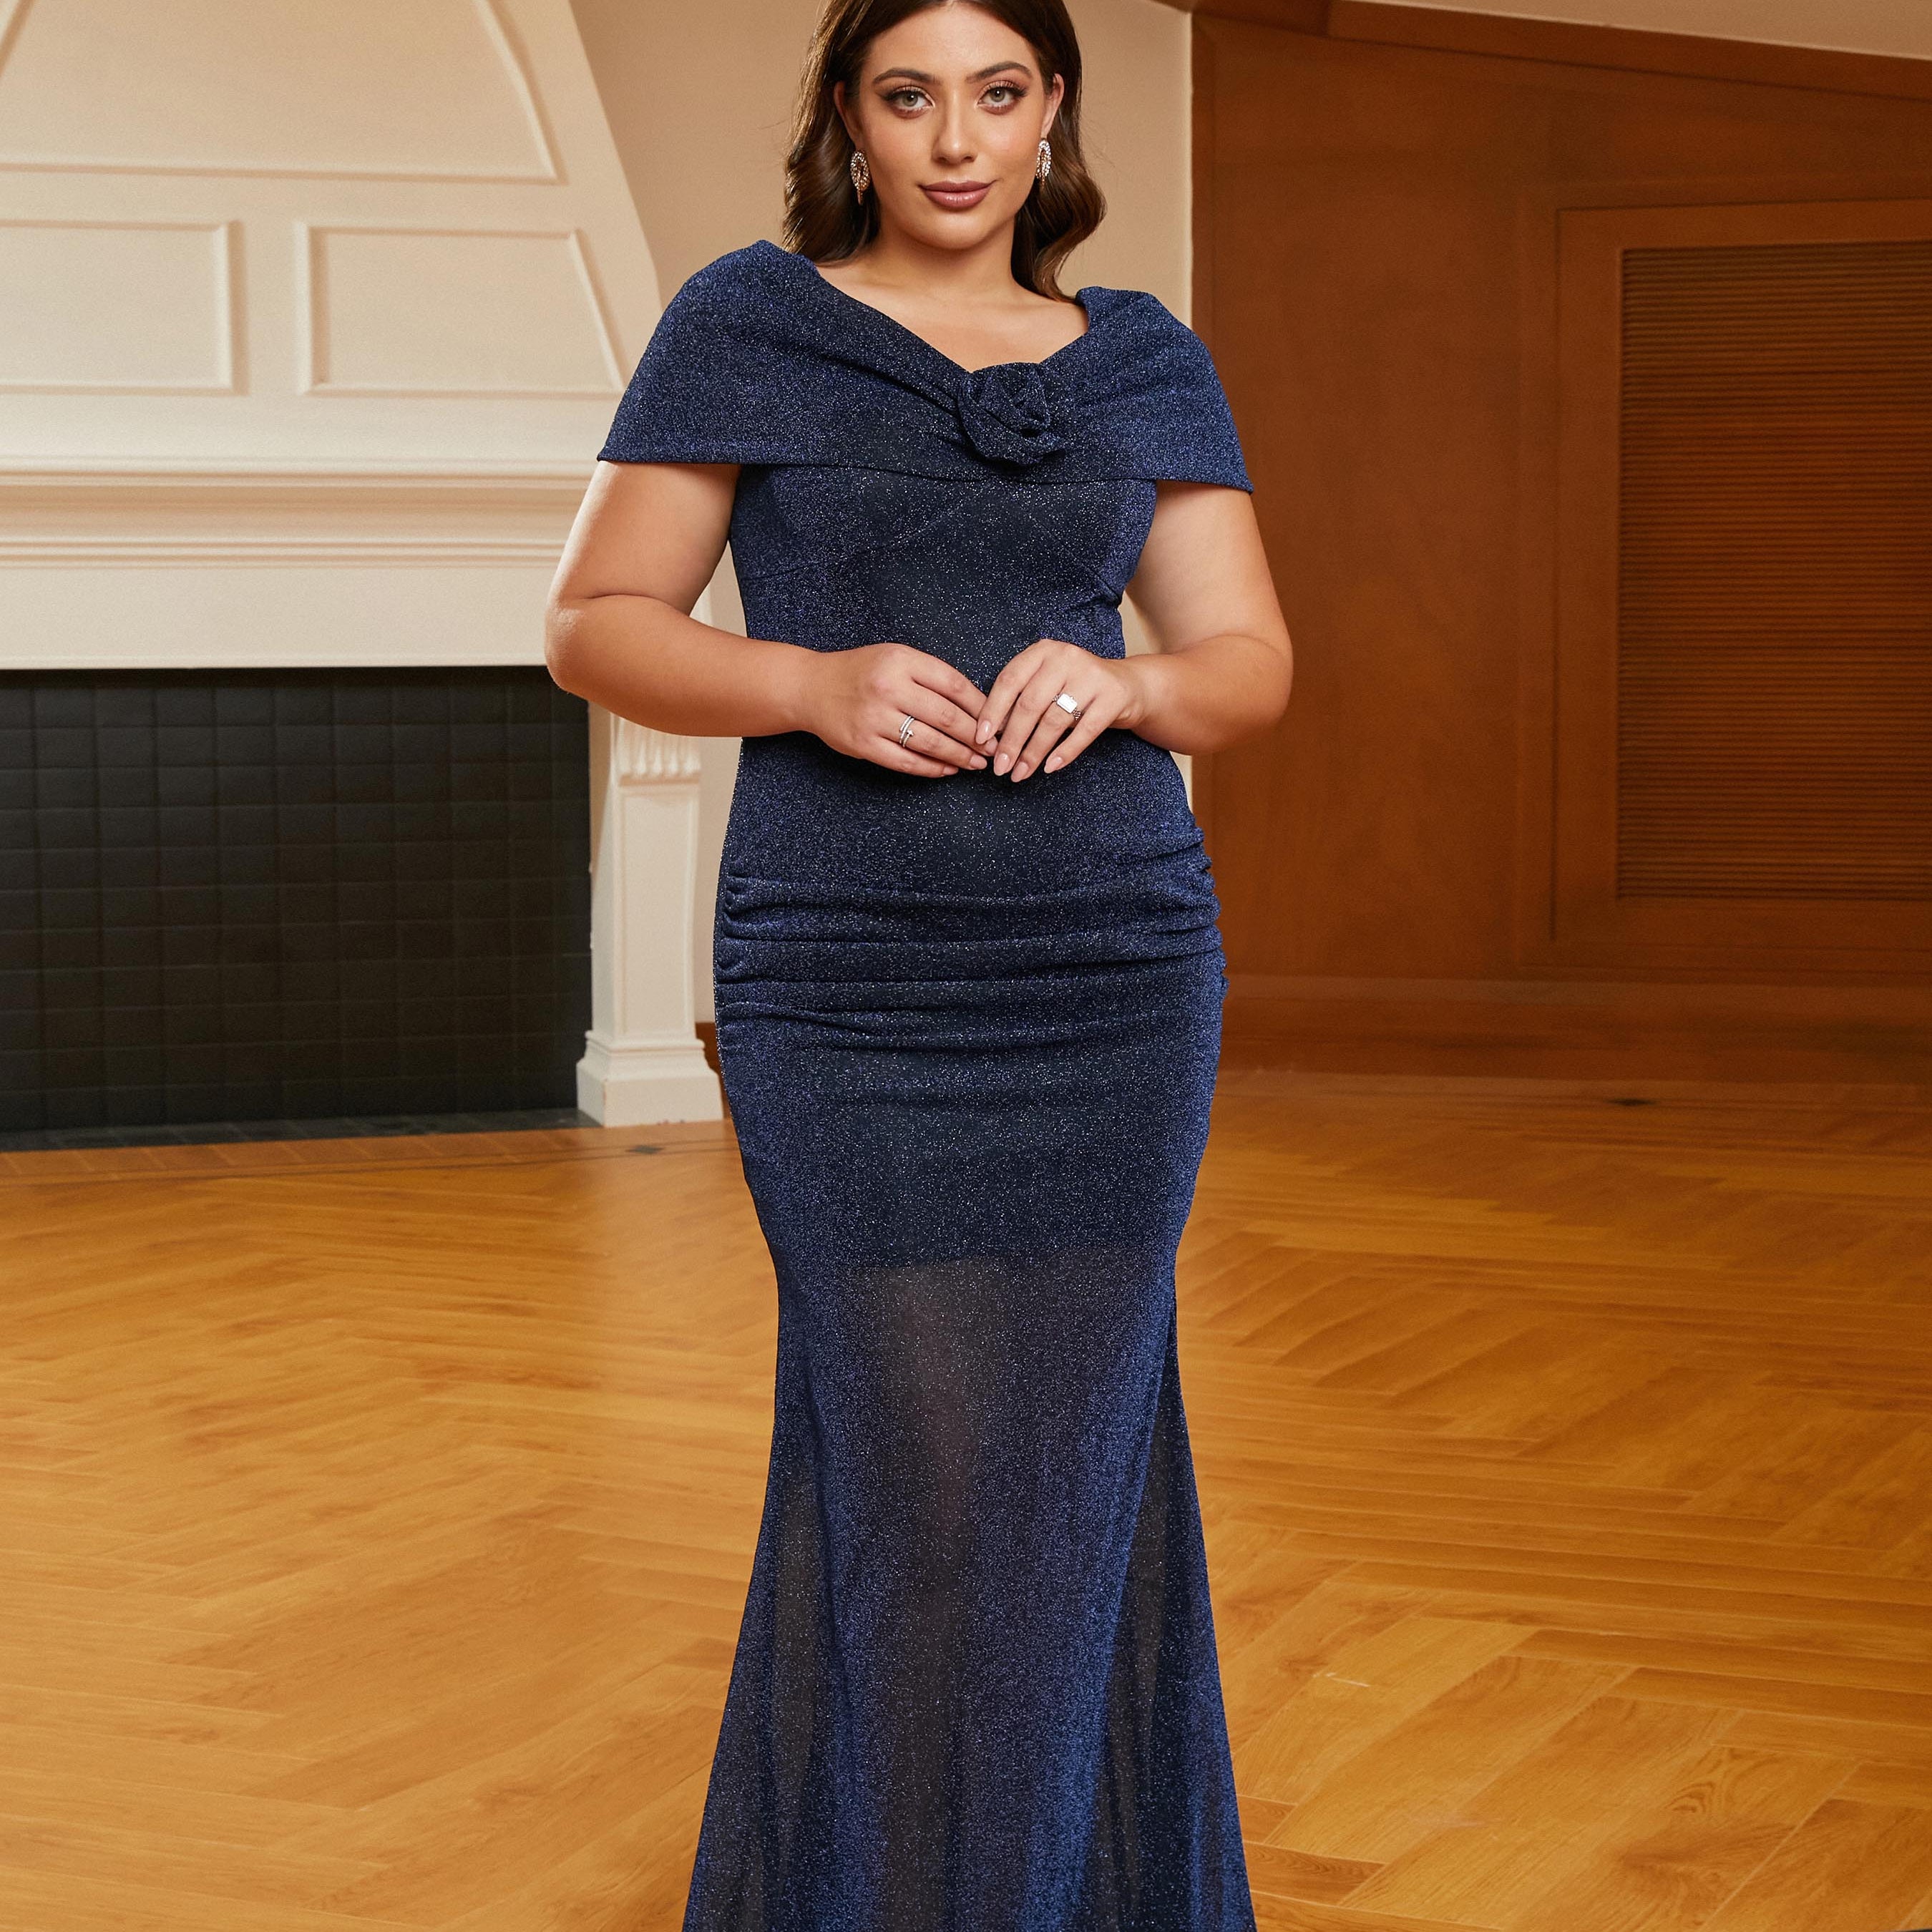 MISSORD Plus Size Appliqued Mermaid Blue Sequin Evening Dress